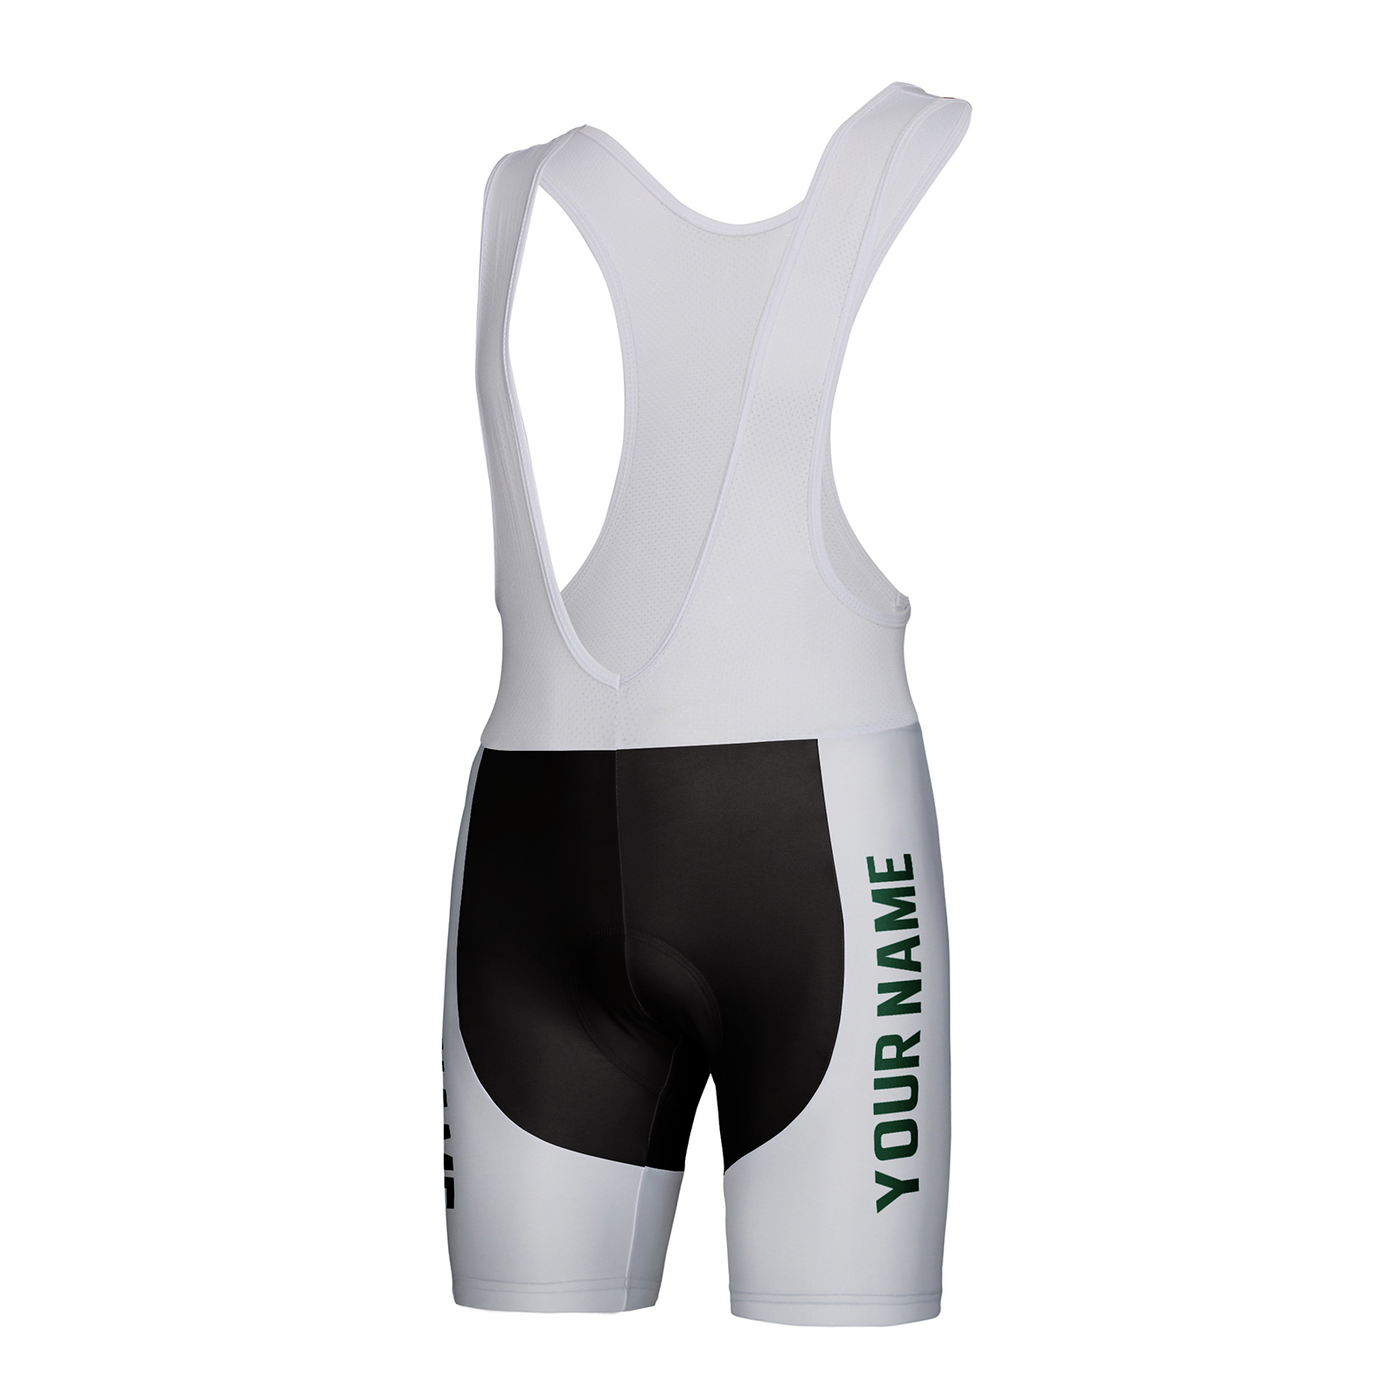 Customized New York Team Unisex Cycling Bib Shorts